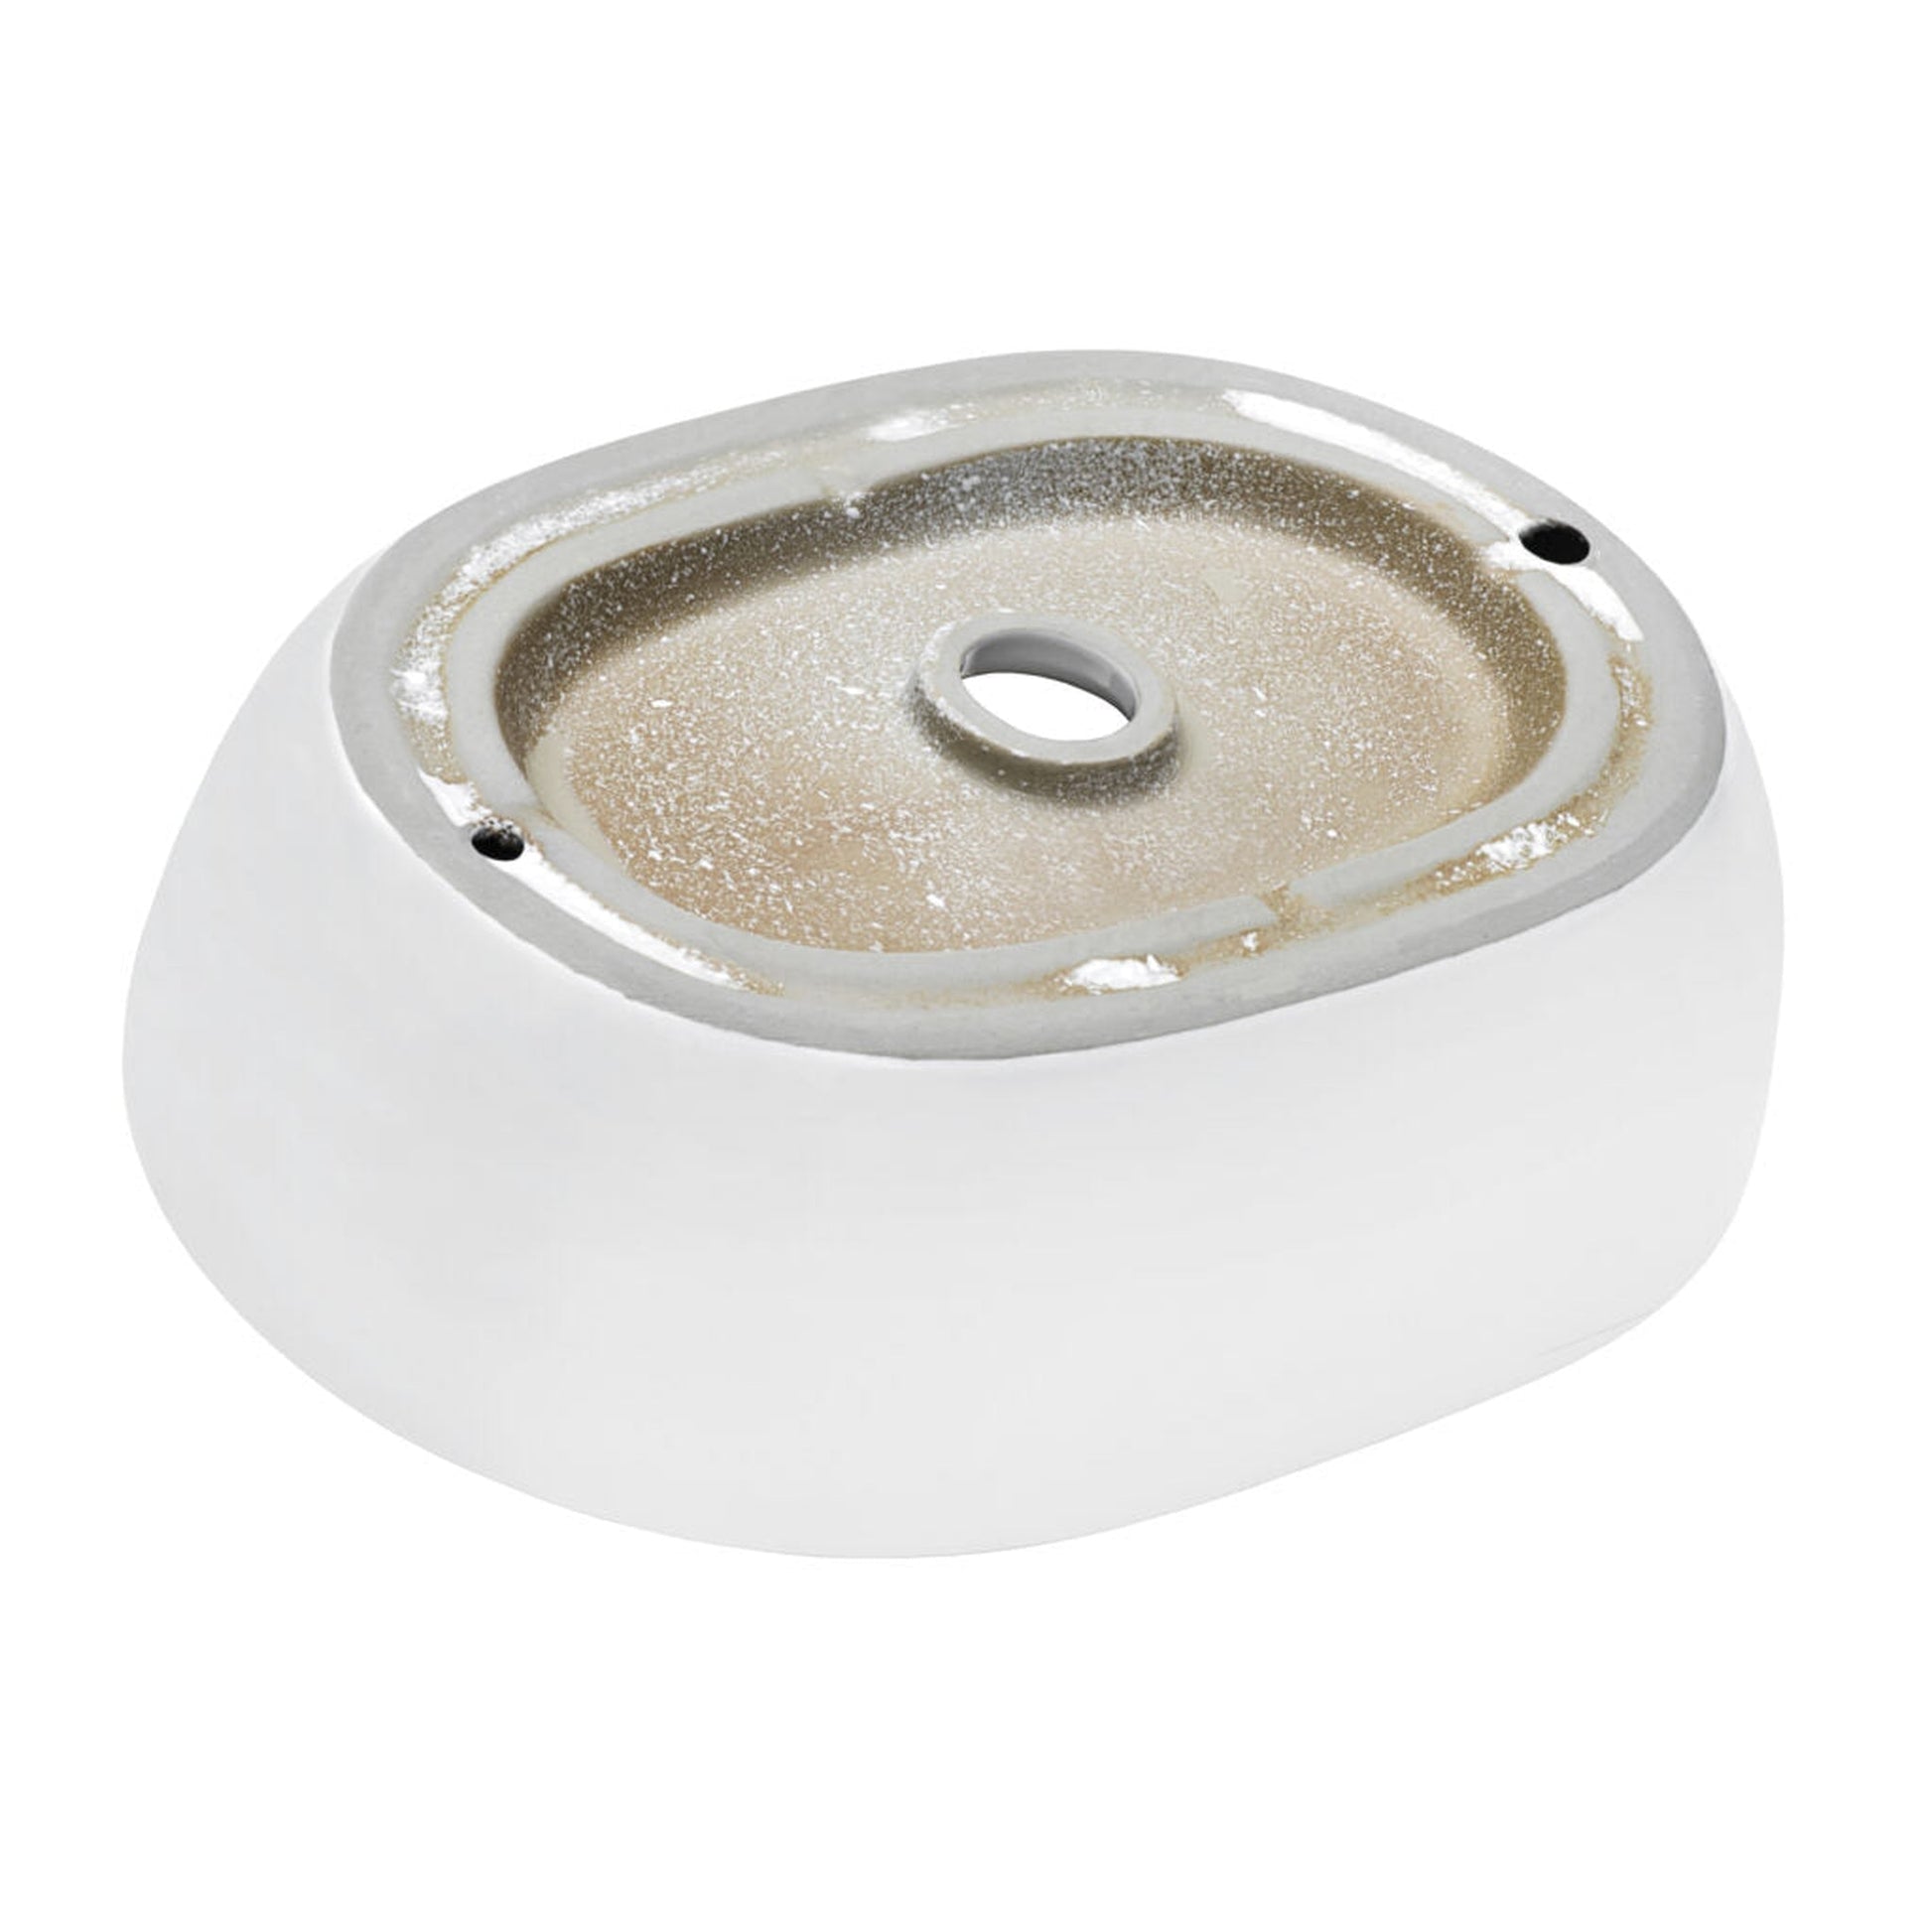 Ruvati Vista 24” x 16” Oval White Above Counter Porcelain Ceramic Bathroom Vessel Sink